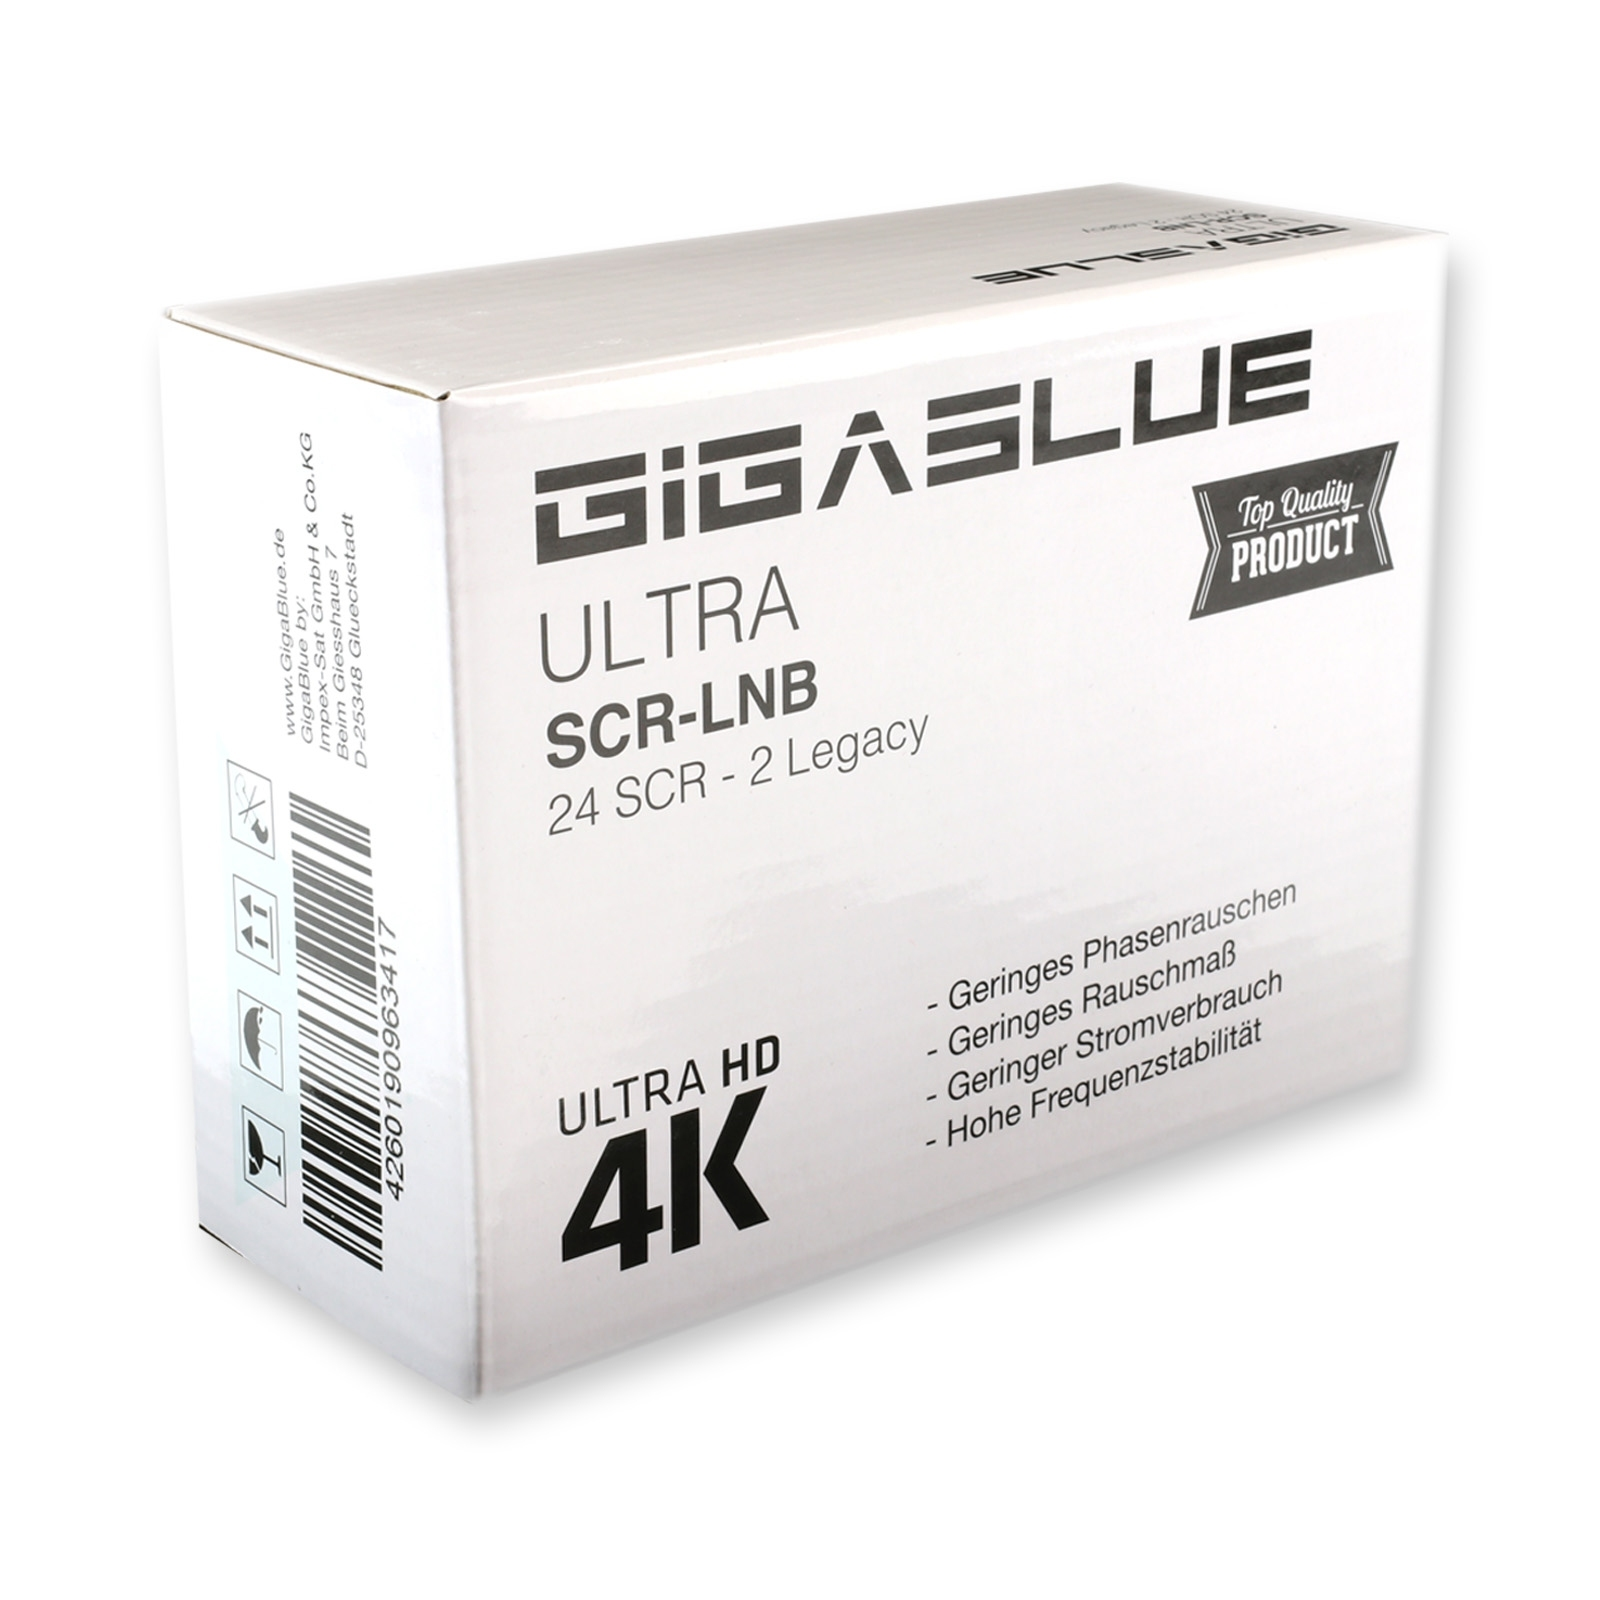 GIGABLUE Ultra 0.2dB SCR-LNB Unicable LNB 2 Unicable SCR Legacy 24 LNB